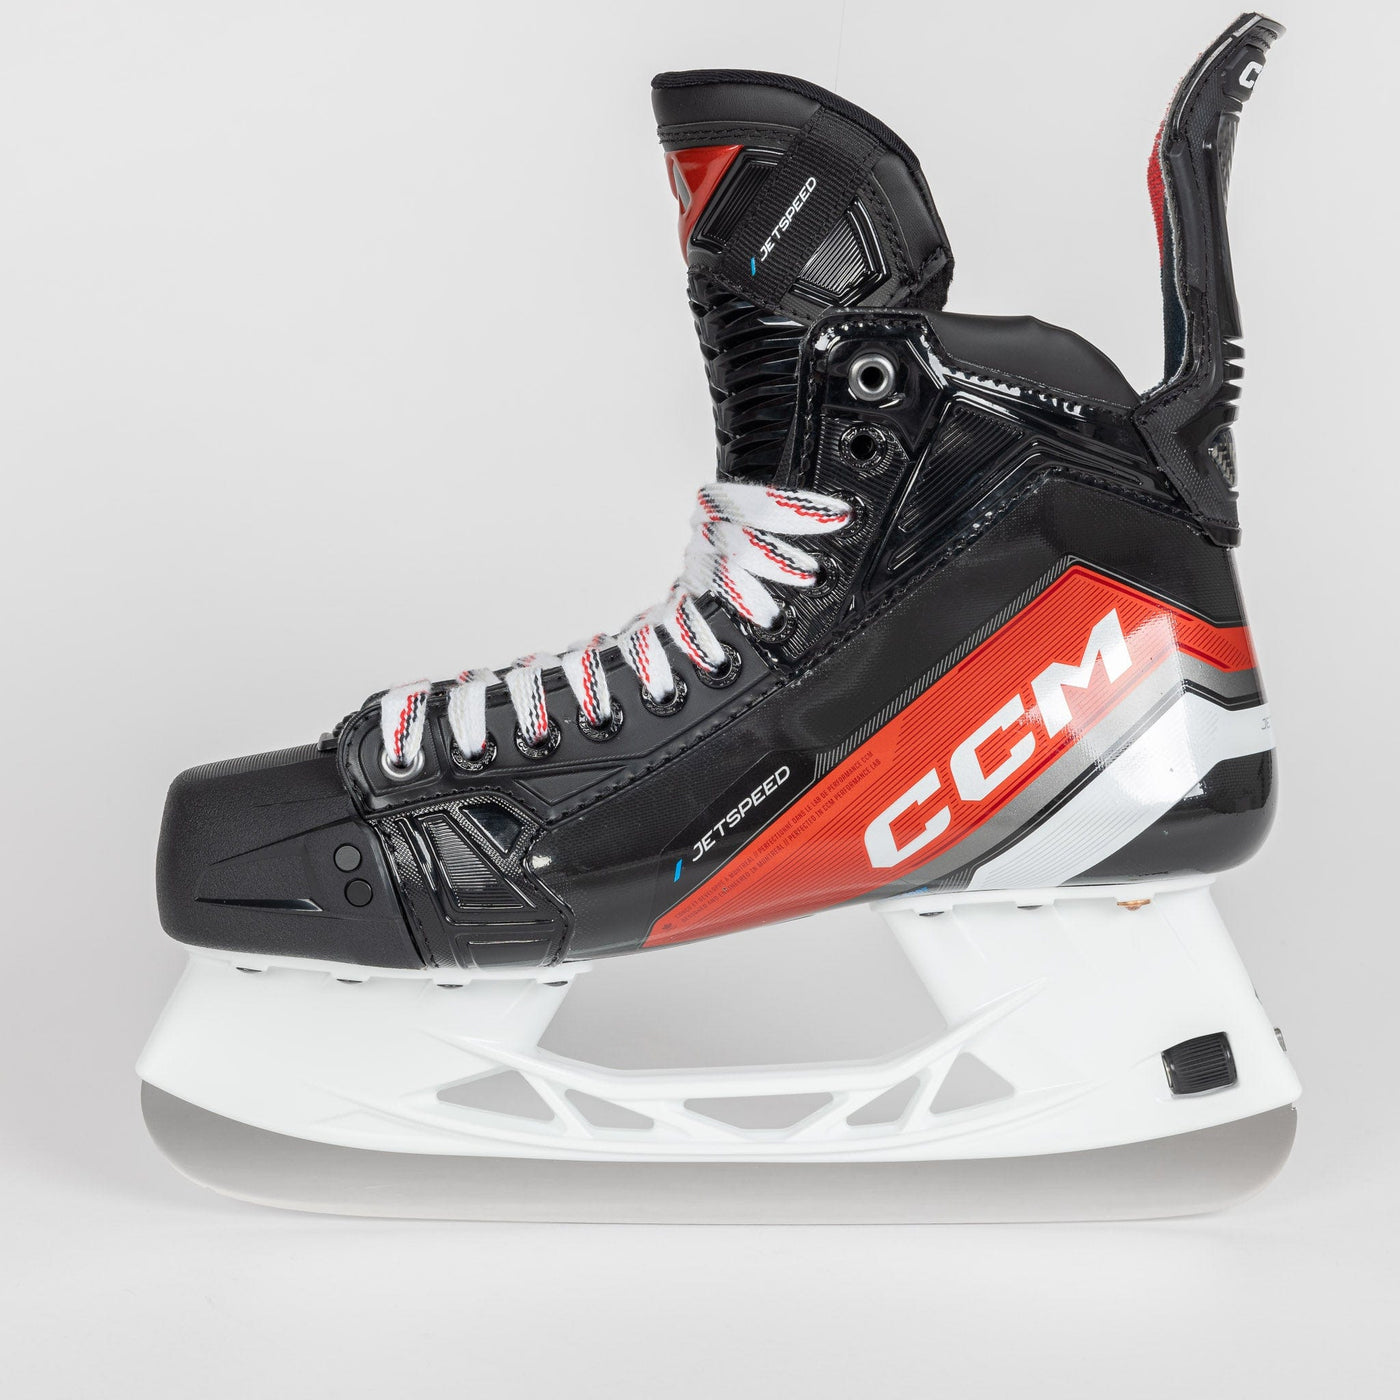 CCM Jetspeed Control Intermediate Hockey Skates - The Hockey Shop Source For Sports